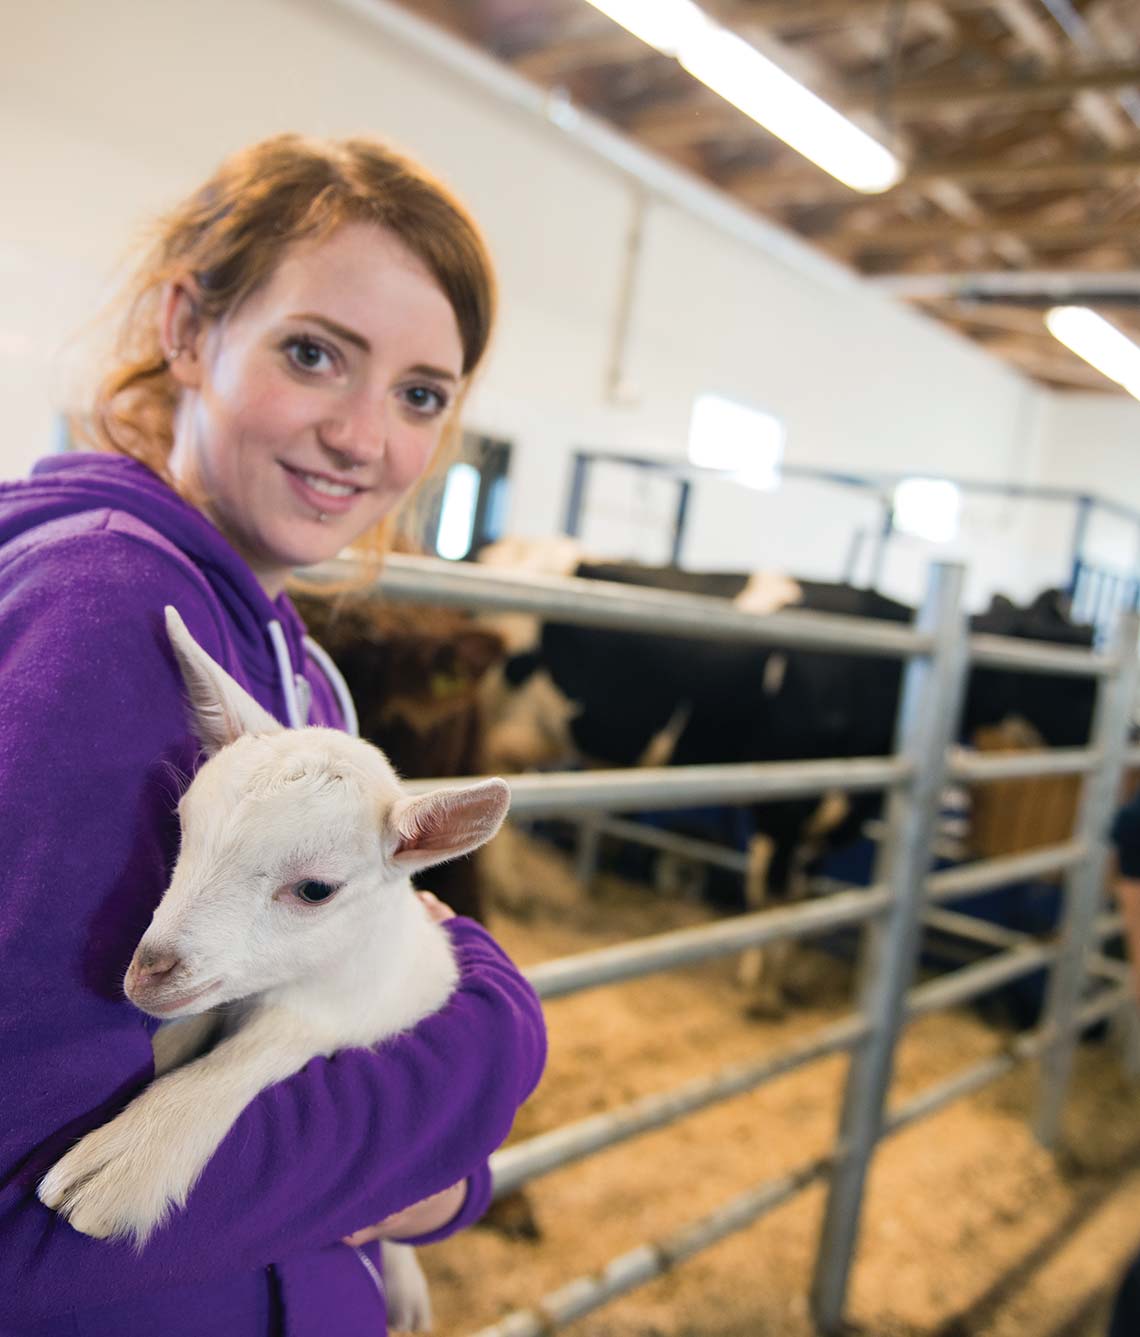 Build a career caring for farm animals